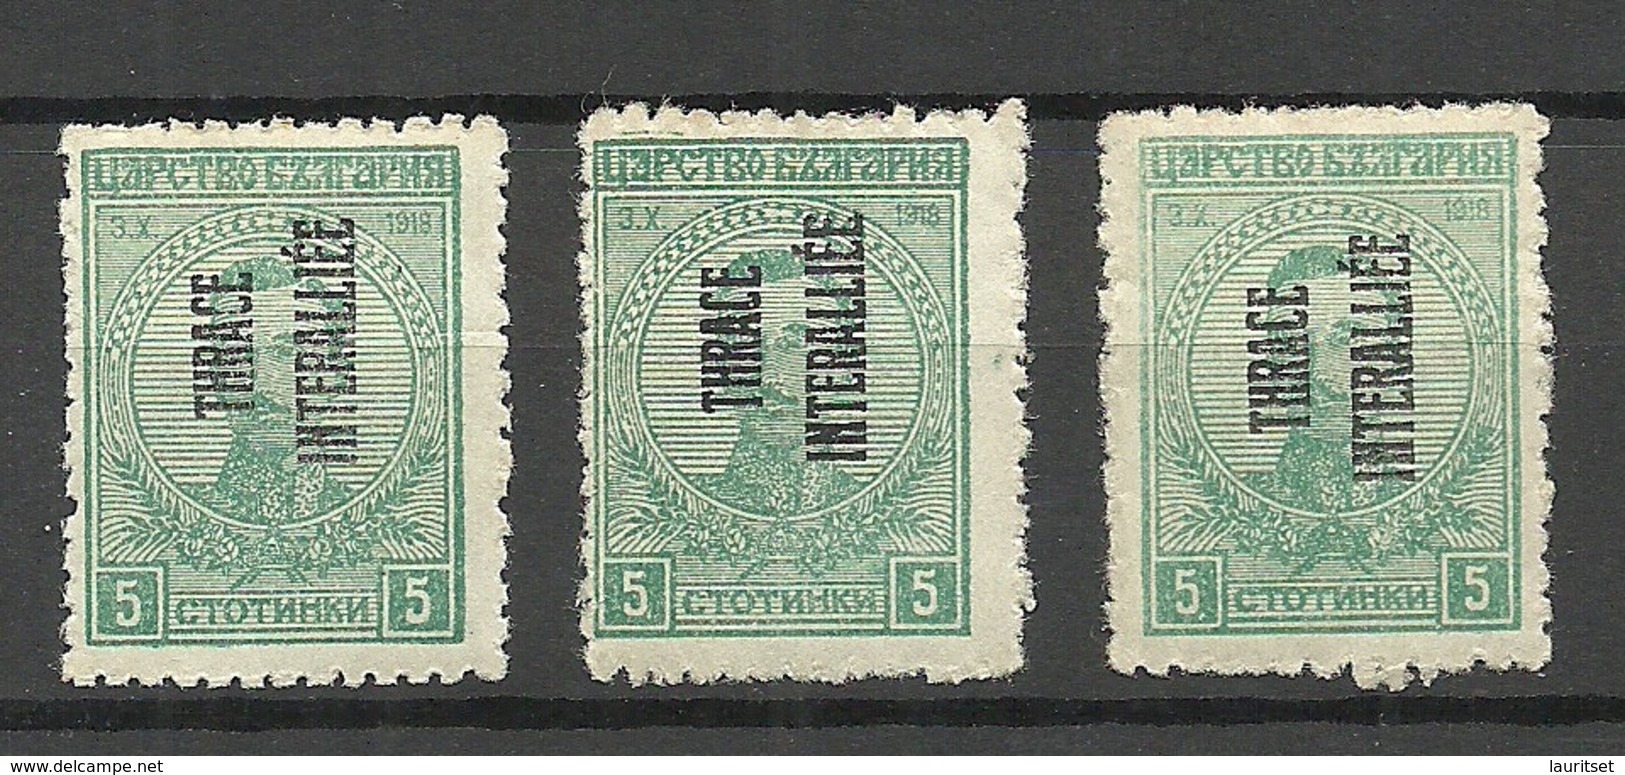 THRAKIEN THRACE 1920 Michel 1 Portomarke Postage Due, 3 Exemplares MNH - Thrace